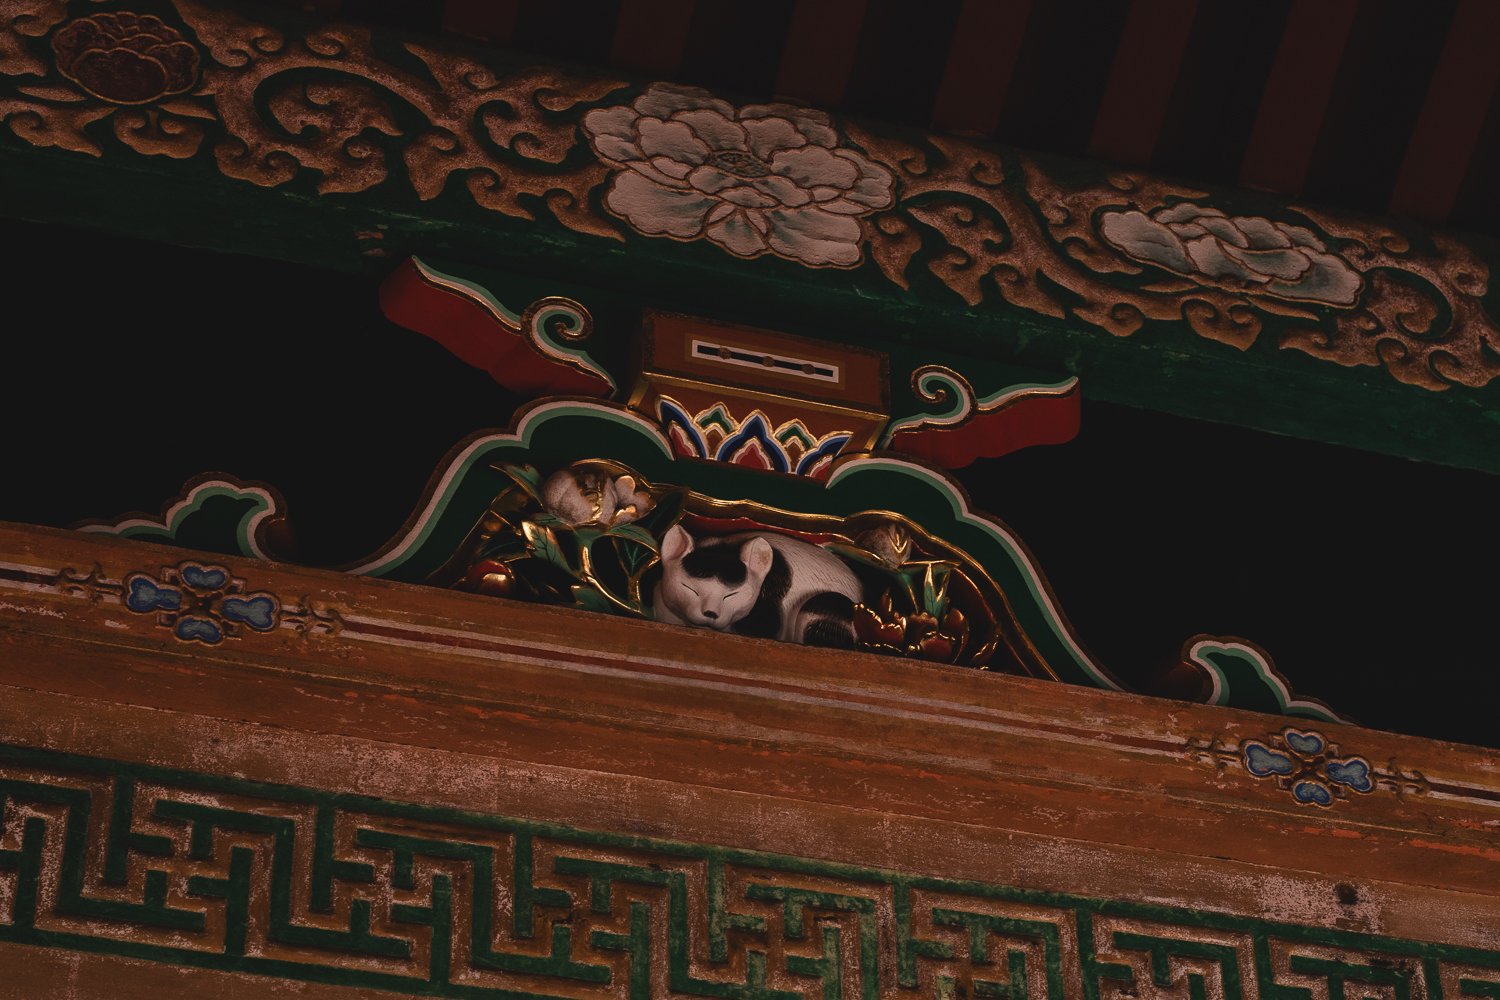 Le nerumi nekko, un petit chat de bois sculpté semblant endormi. La star de Nikko !